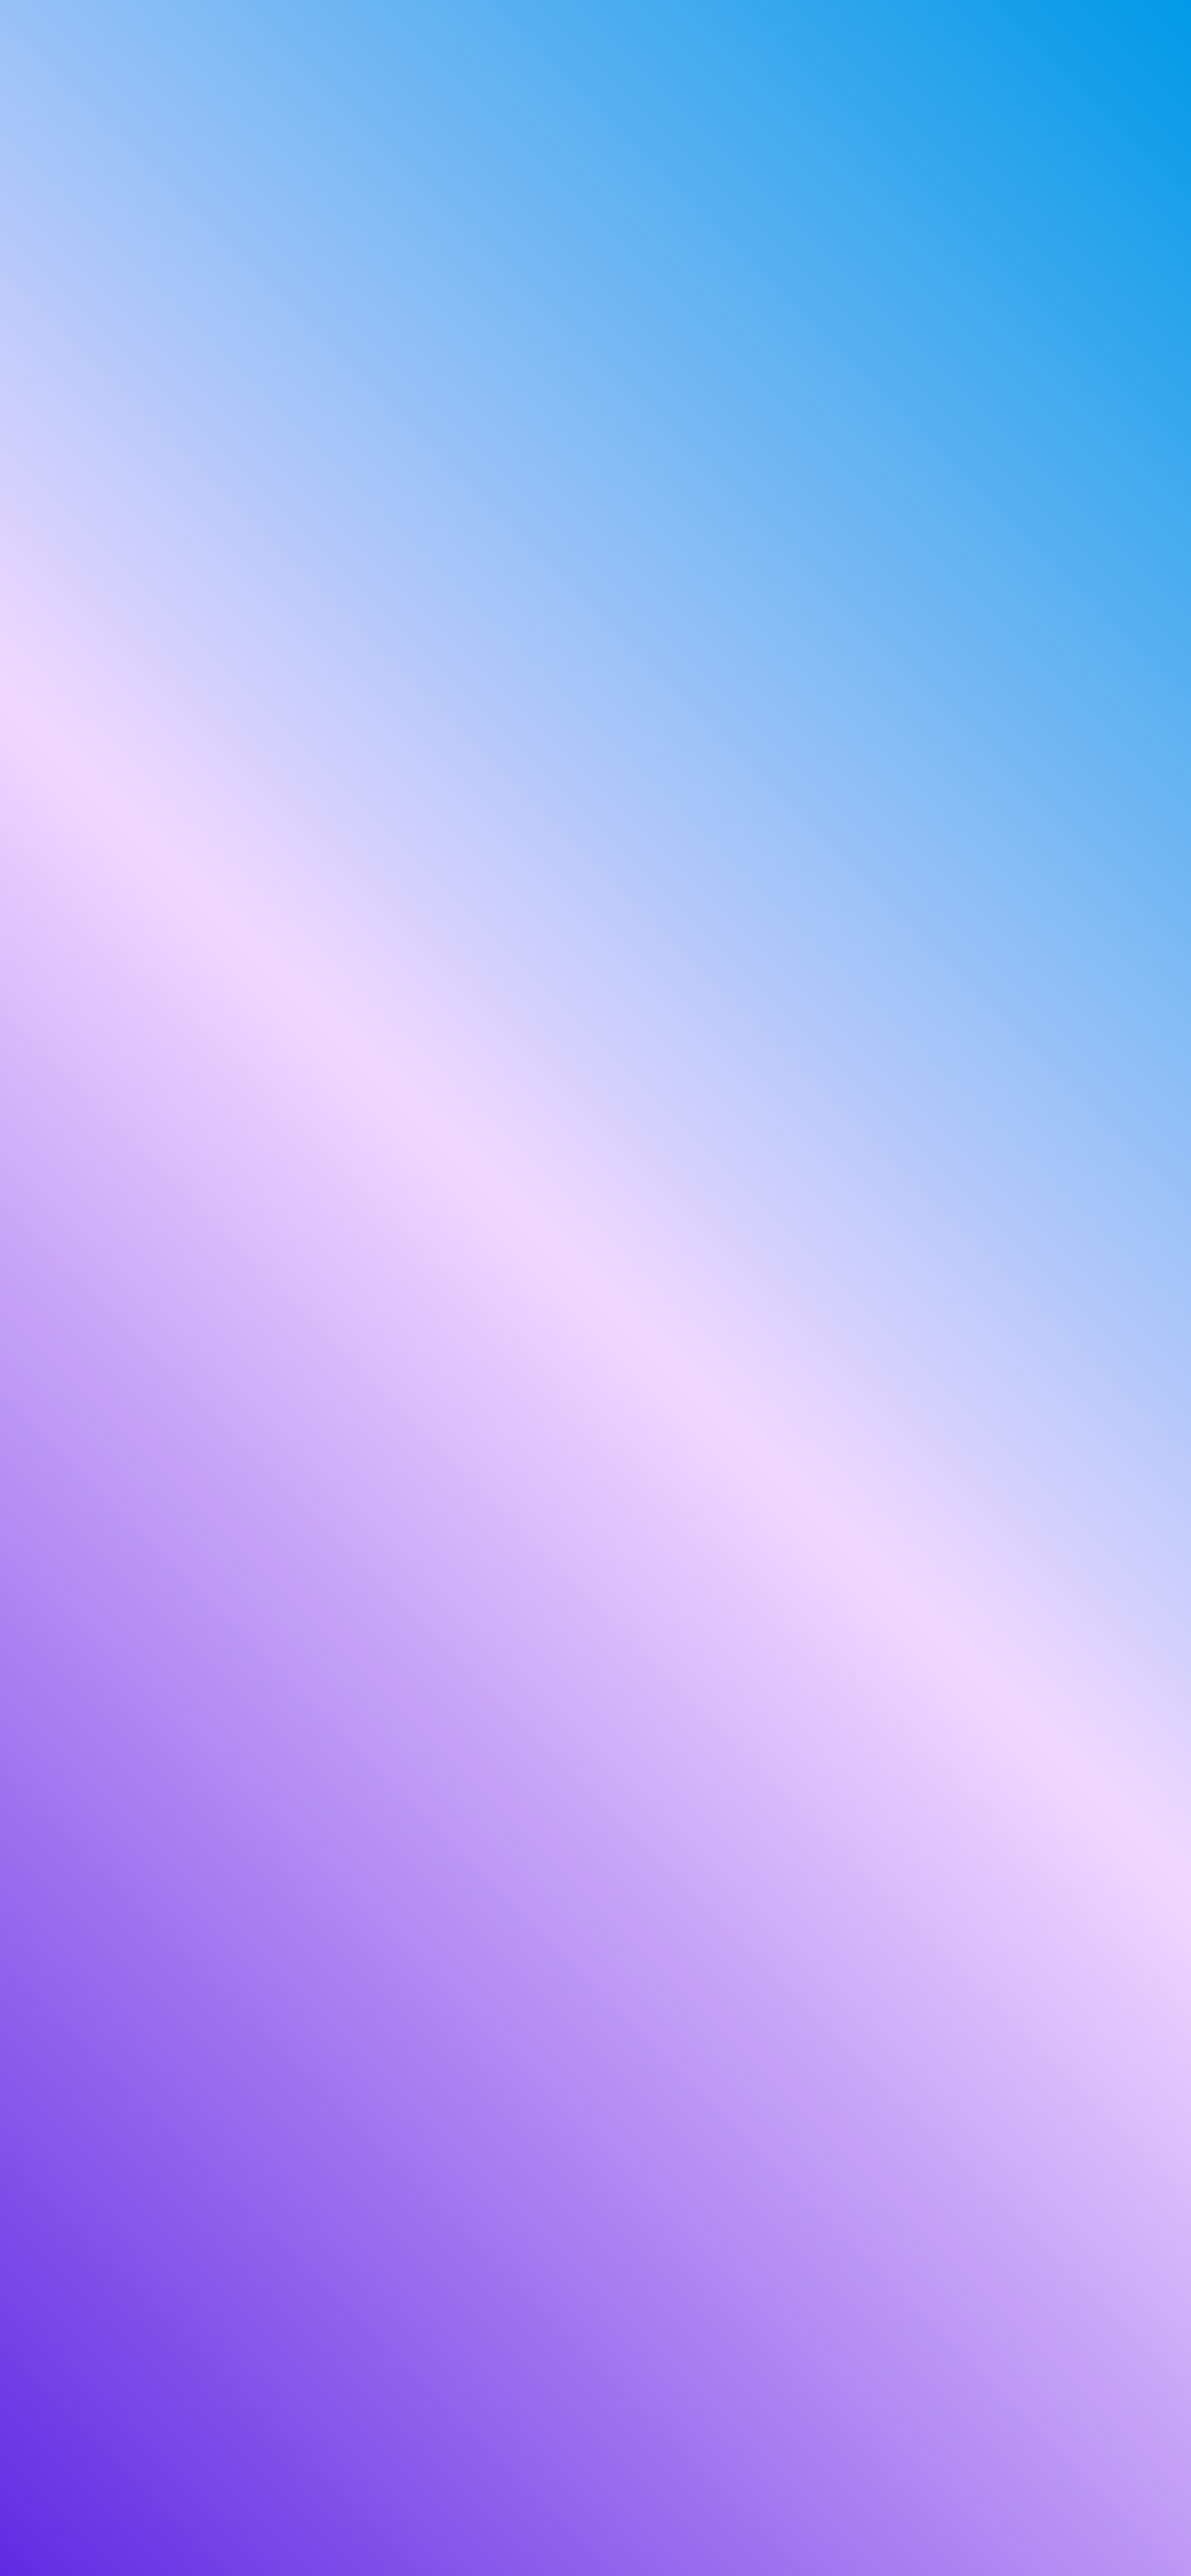 Wallpaper Apples, Ios, Purple, Violet, Cloud, Background - Download Free  Image